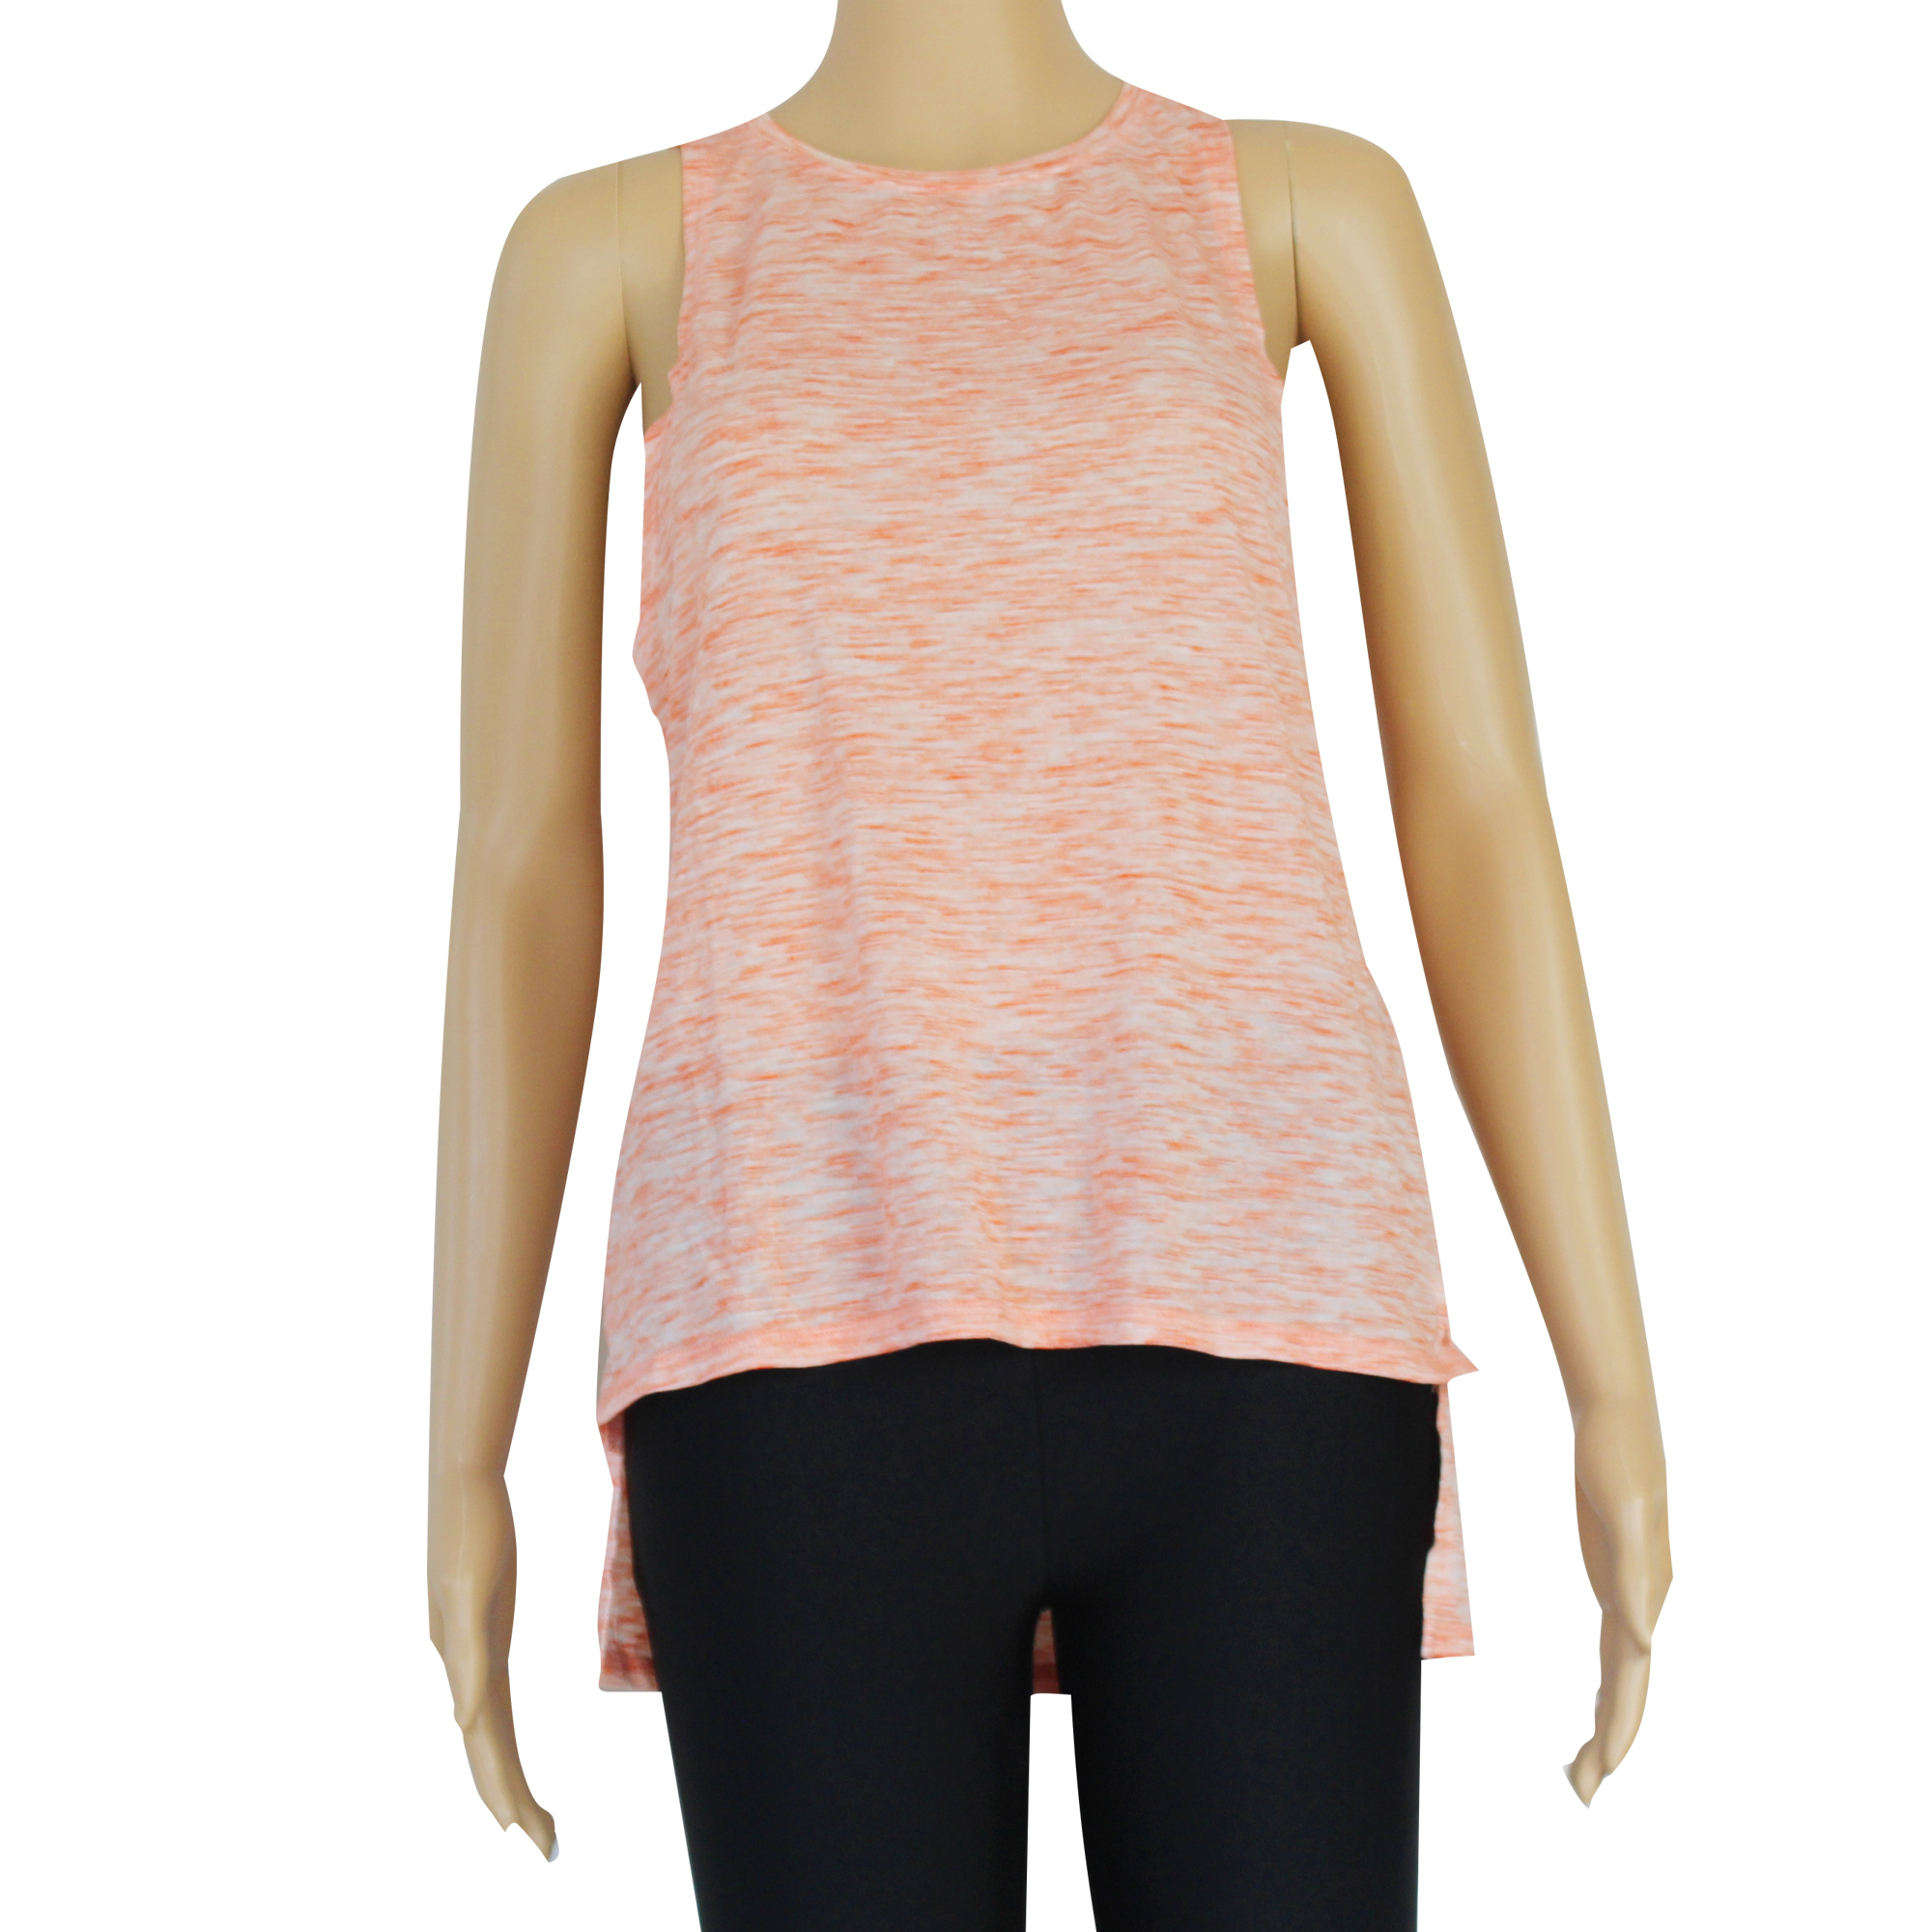 Women's Yoga Tank Tops Activewear Tops Long Workout Shirts Racerback Quick Dry Orange - S - image 1 of 4